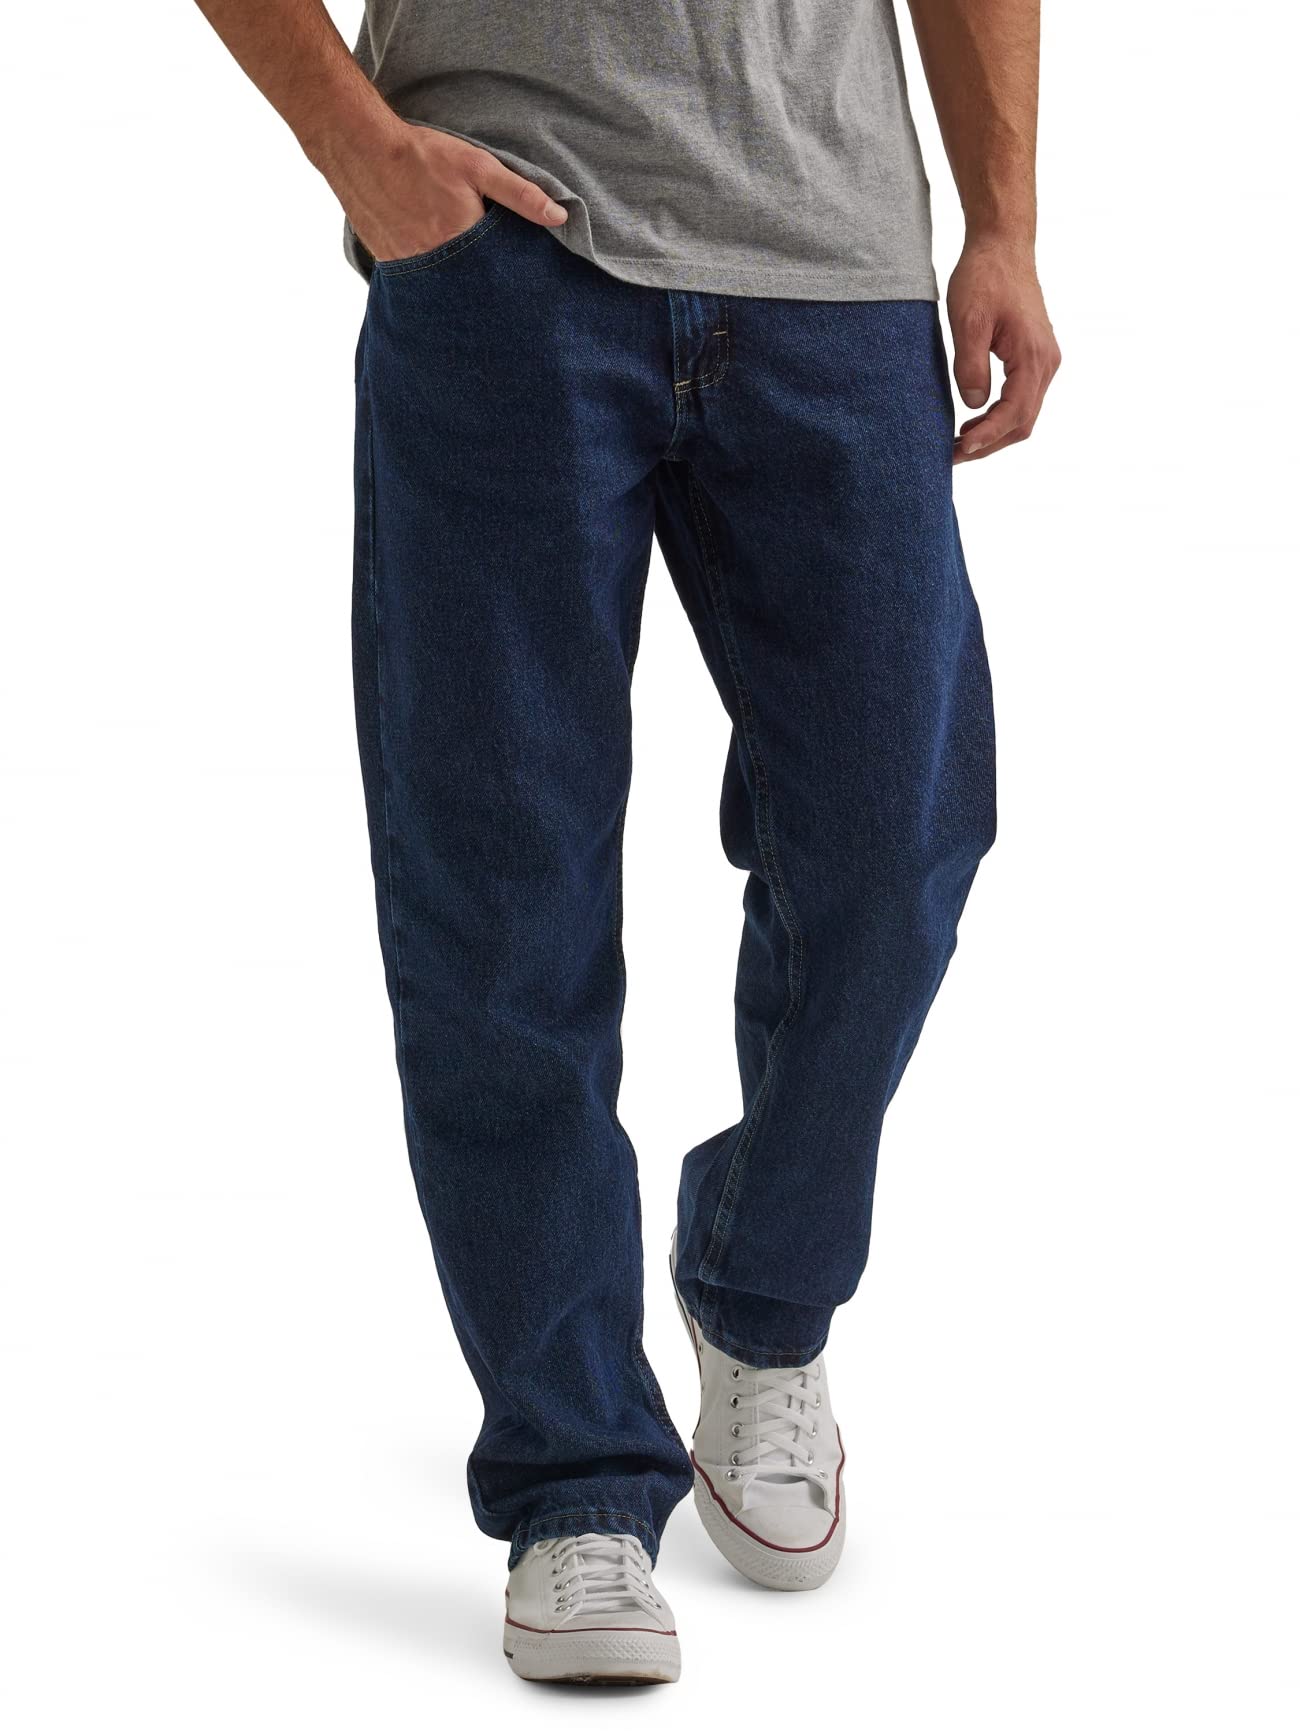 Wrangler Authentics Men's Big & Tall Classic 5-Pocket Relaxed Fit Cotton Jean, Dark Rinse, 44W X 36L